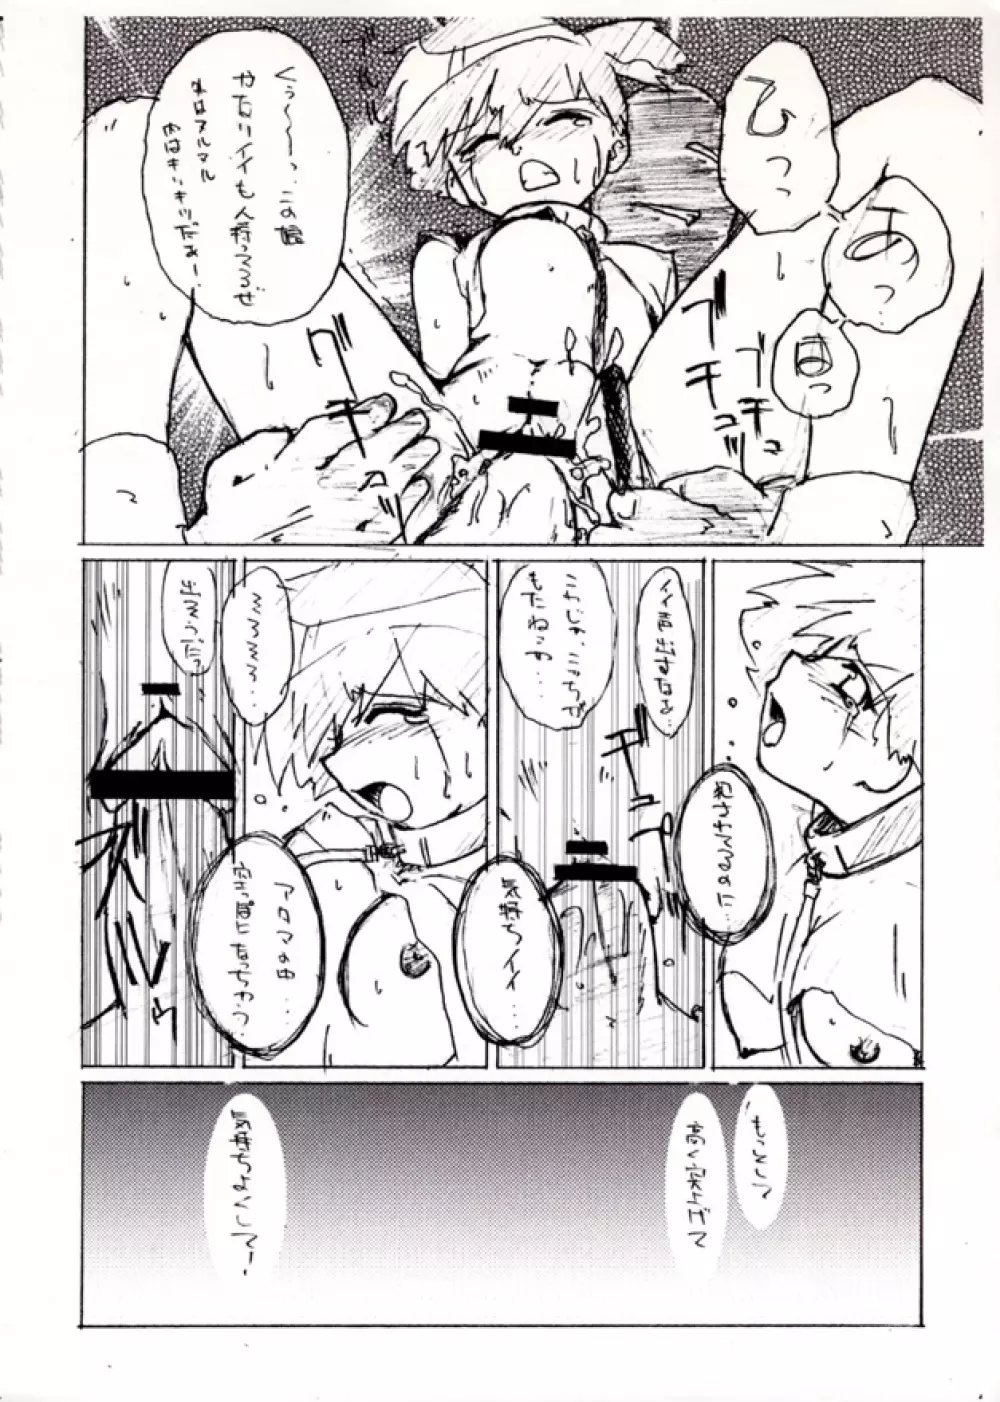 KASUMIX XPLOSION Kasumi Comic part5 - page20